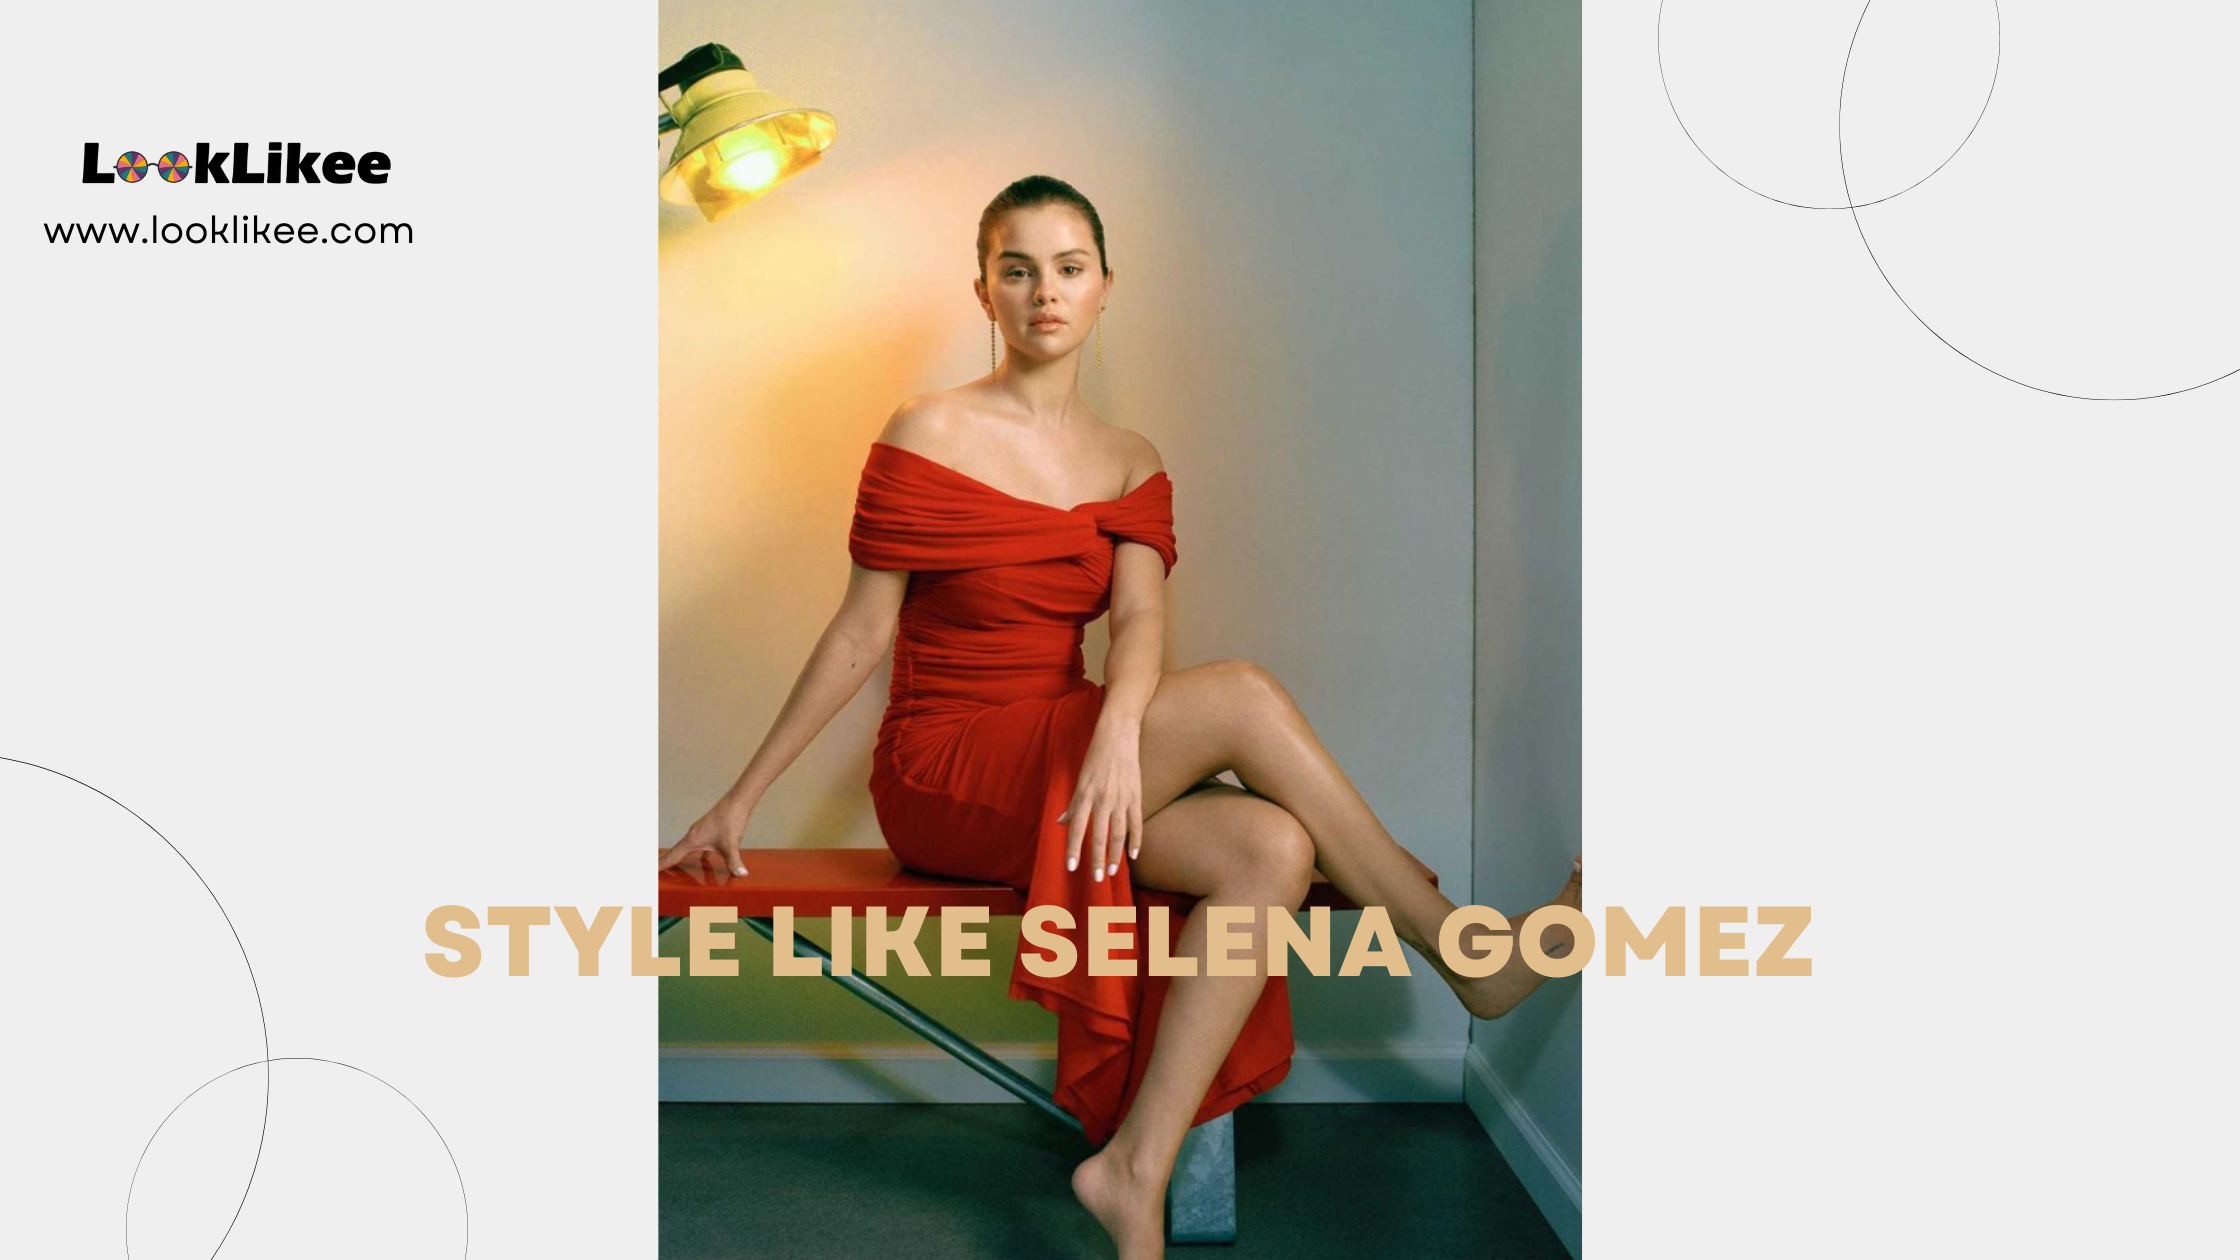 Dress like Selena Gomez: Secrets, Styles & Tips Revealed!